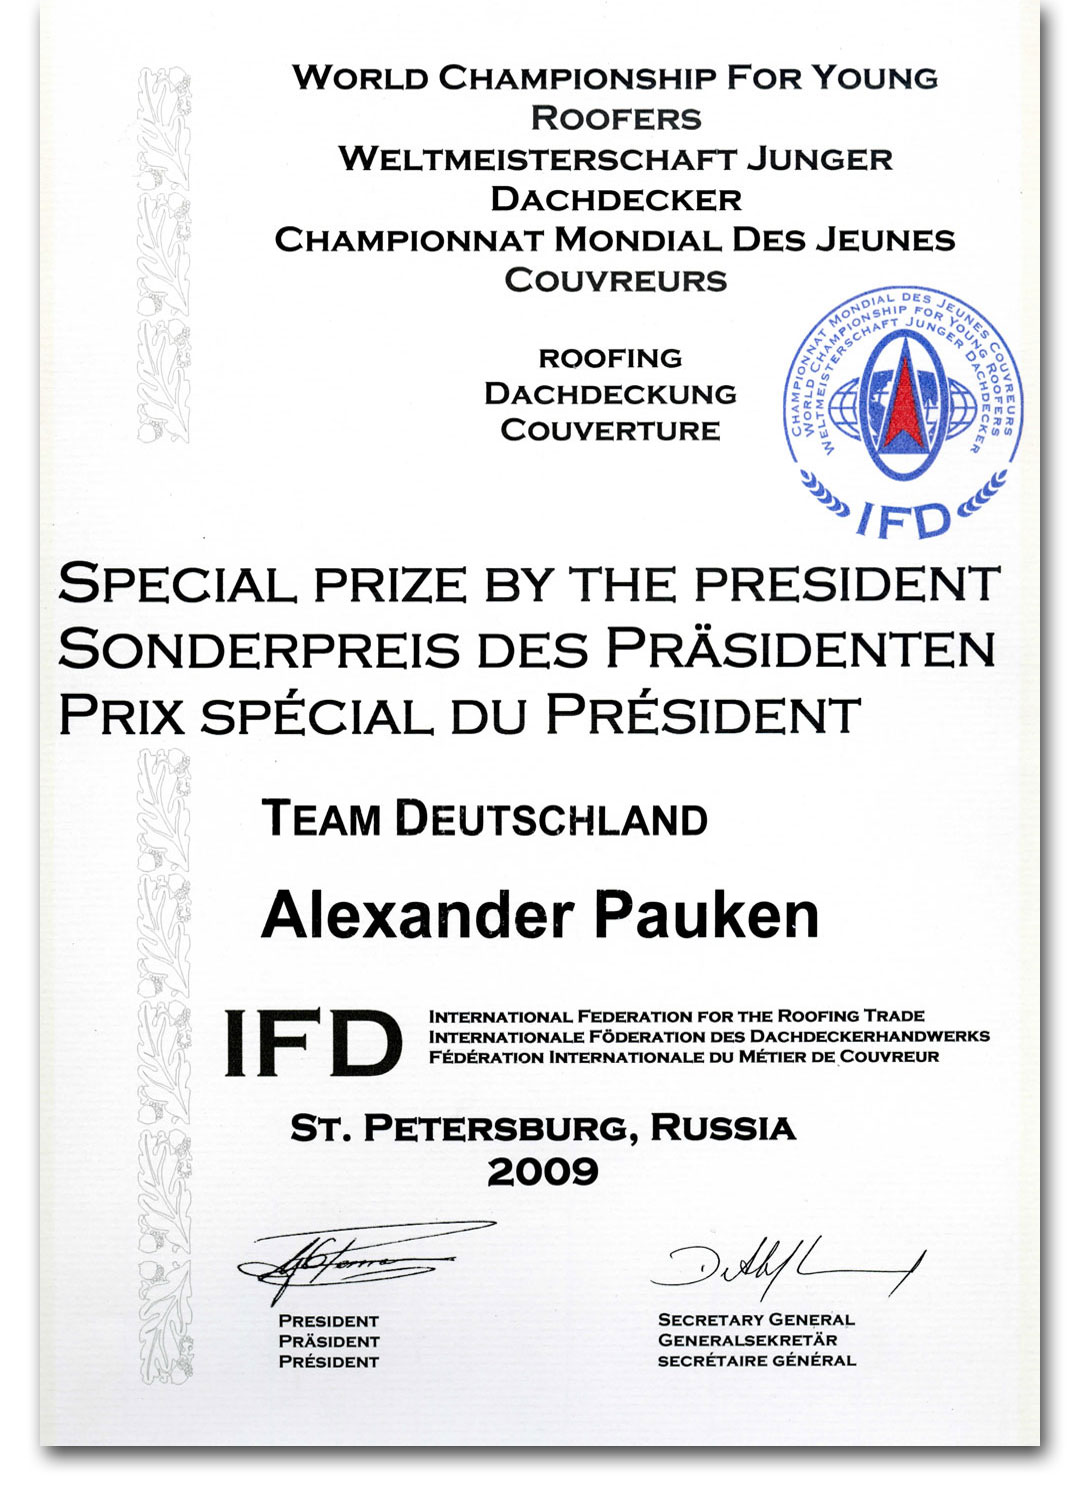 IFD Worldchampion